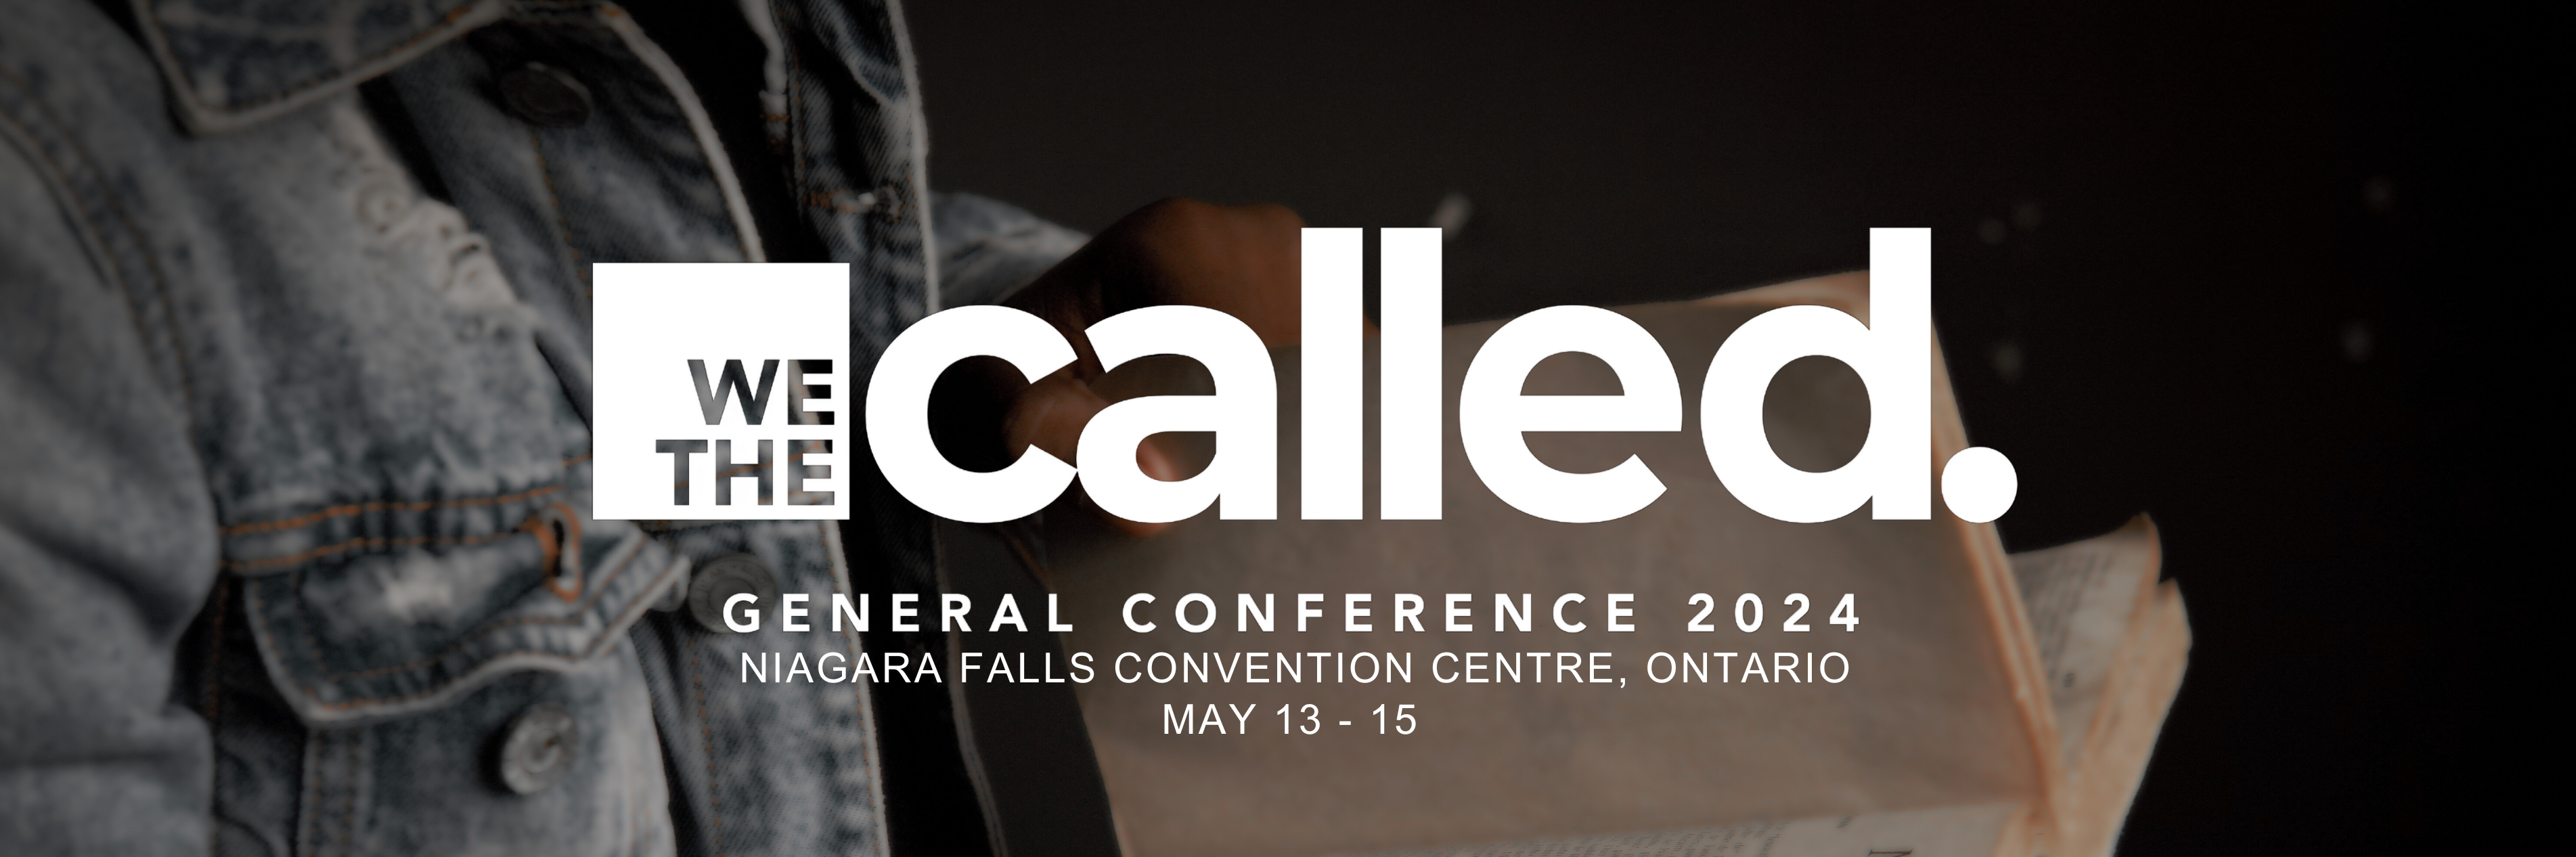 General Conference 2024 May 13-15 Niagara Falls Convention Centre Ontario